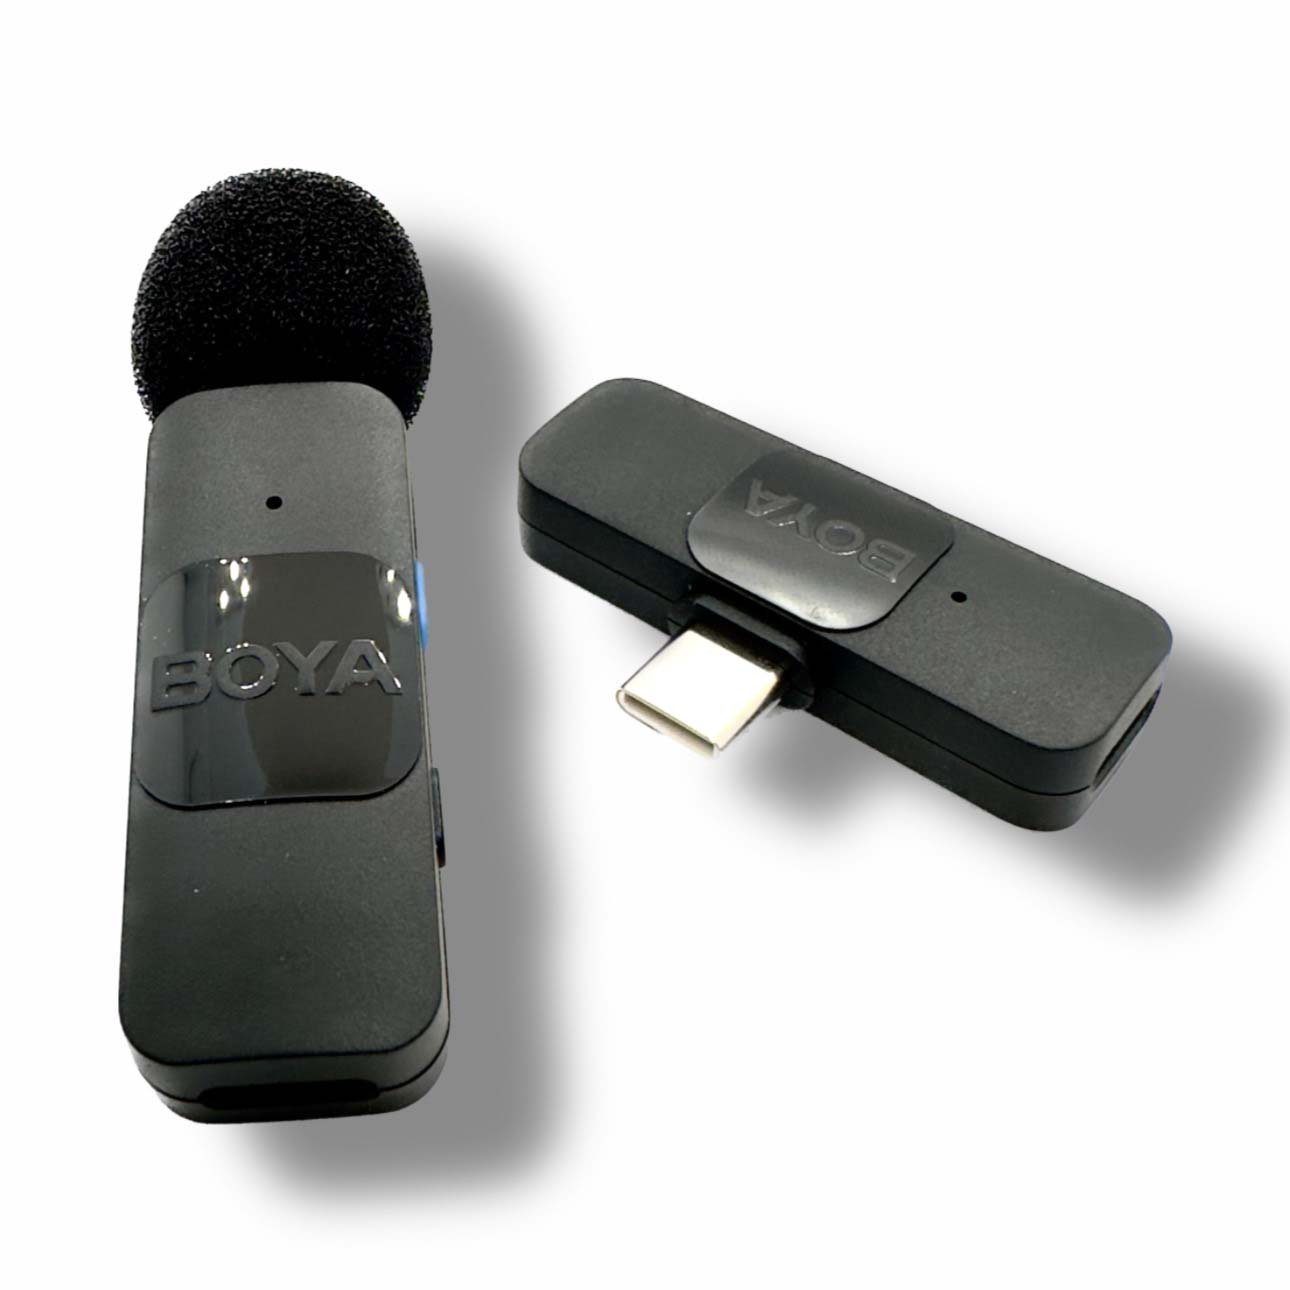 Boya By V10 Ultracompact 2.4GHz Wireless Microphone System